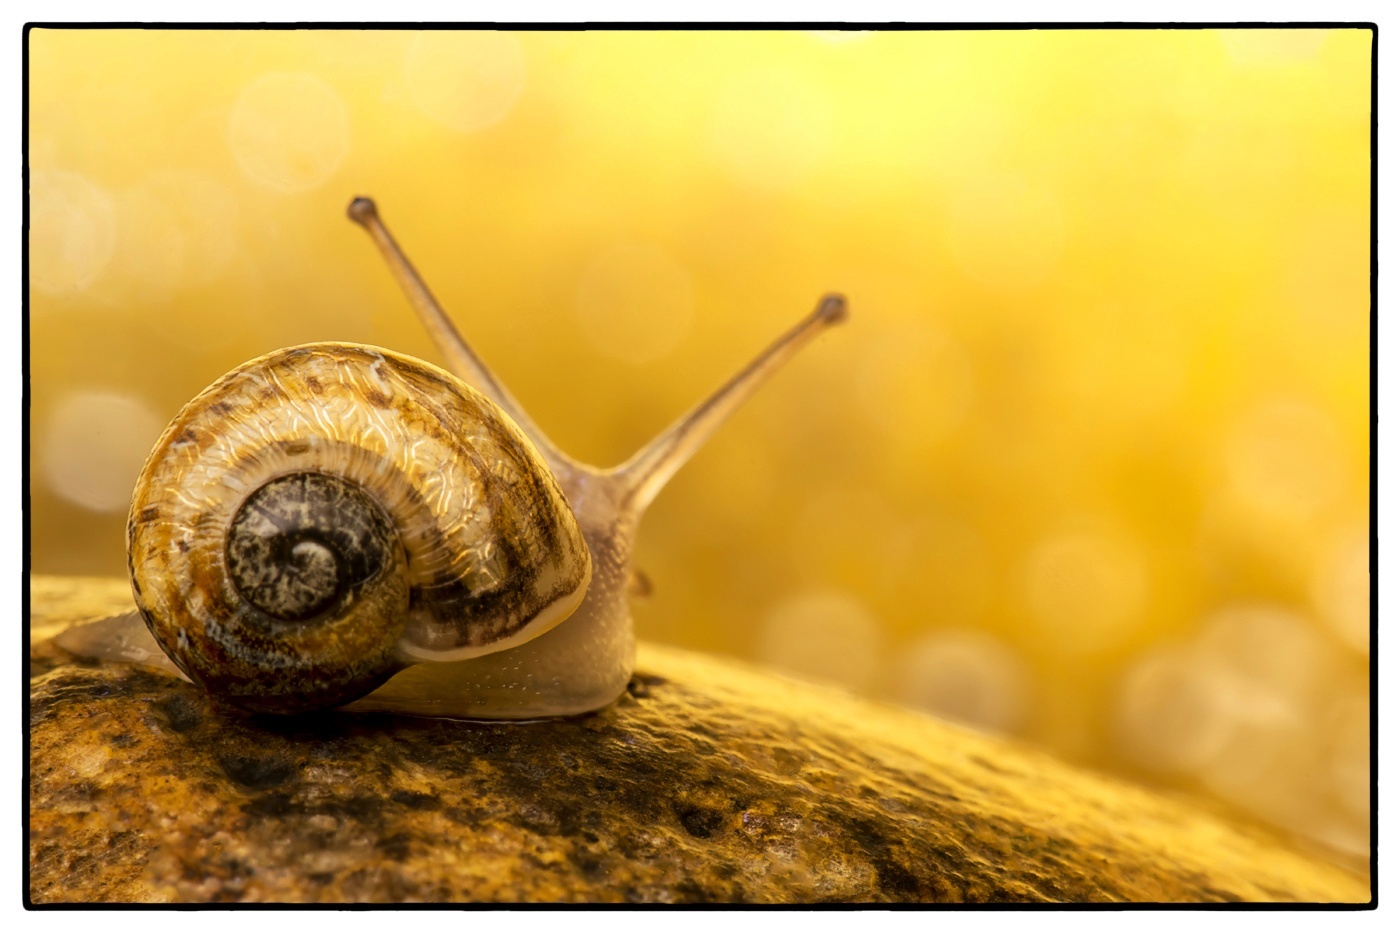 Snail on a pebble near a garden pond